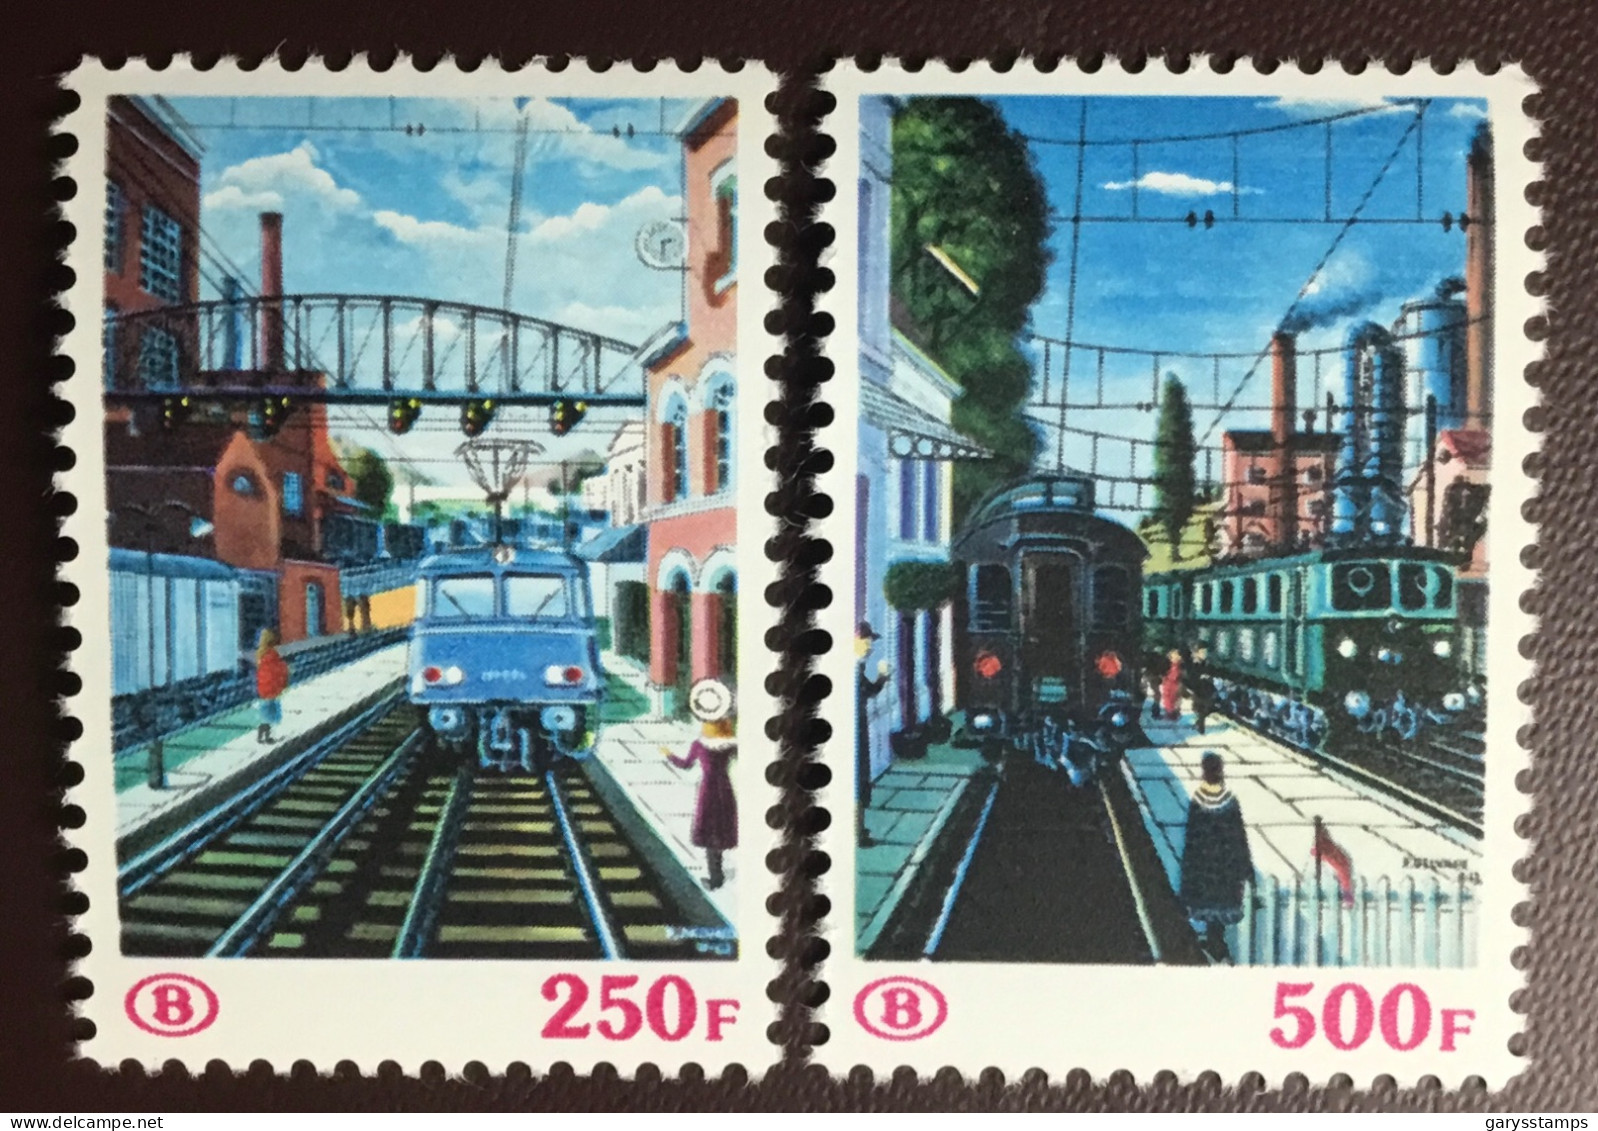 Belgium 1985 150th Anniversary Railway Stamps Set MNH - Mint